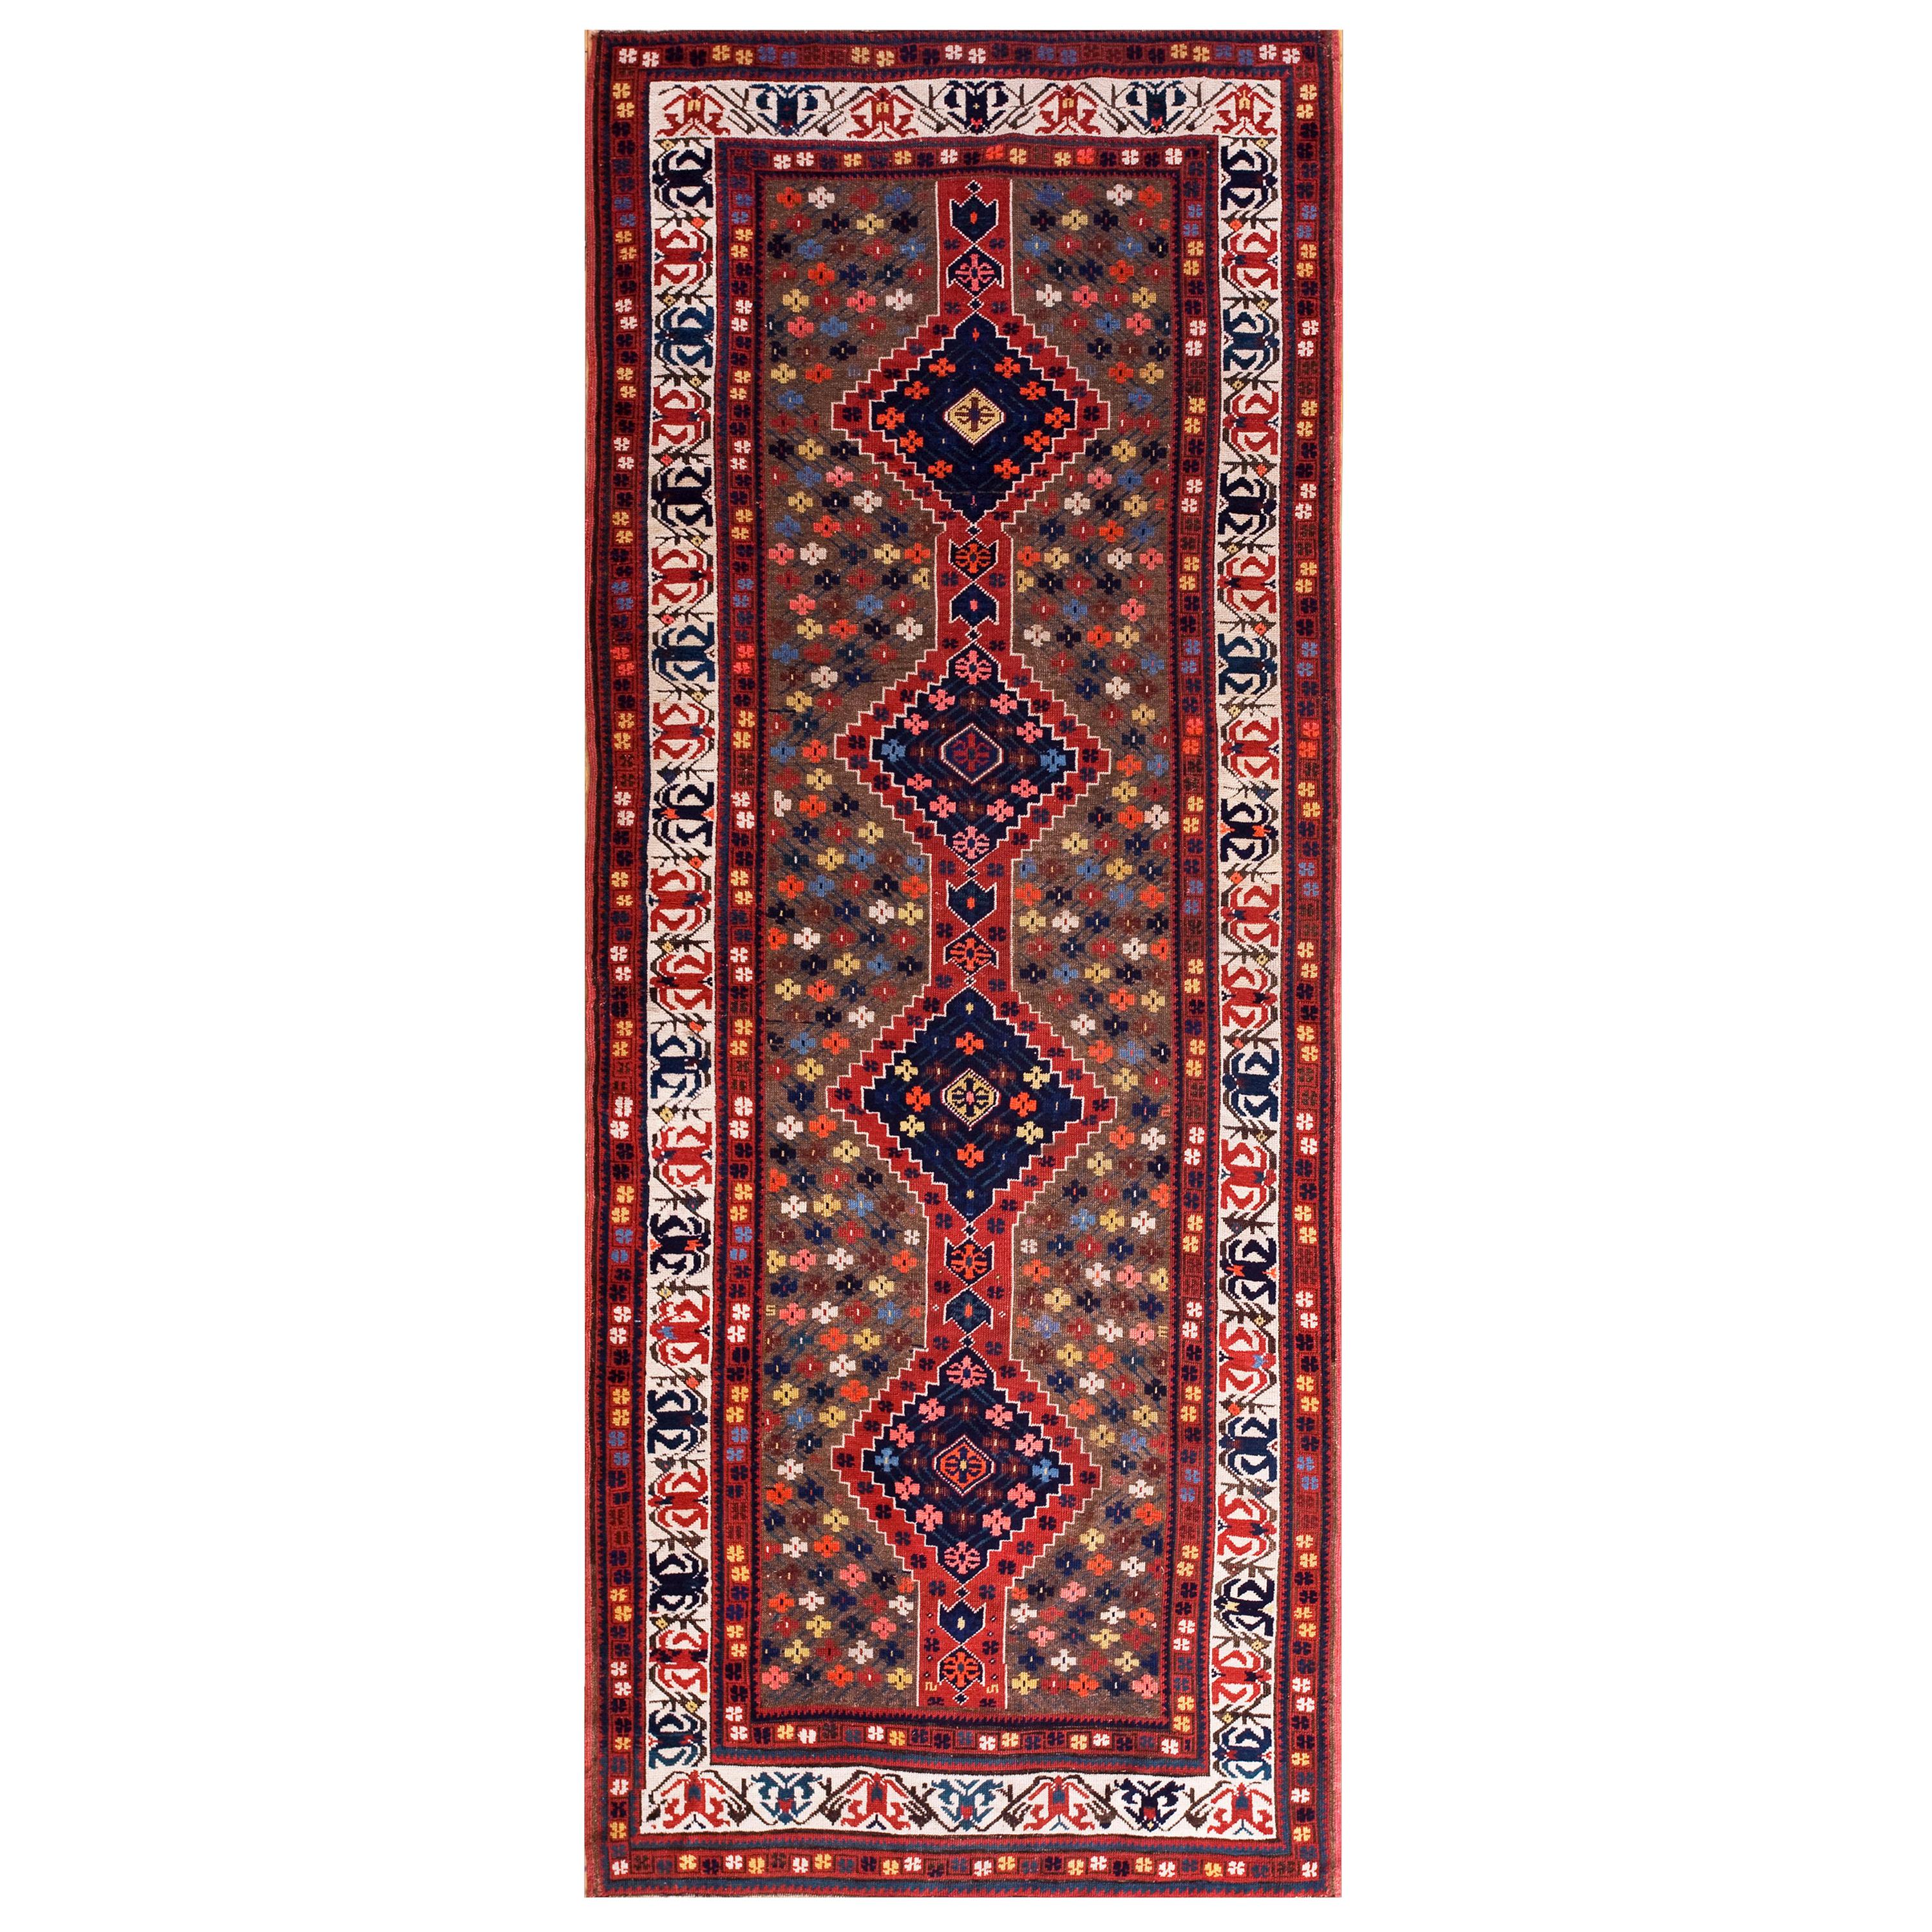 Late 19th Century S. Caucasian Carpet ( 4' x 9'6" - 122 x 290 ) For Sale